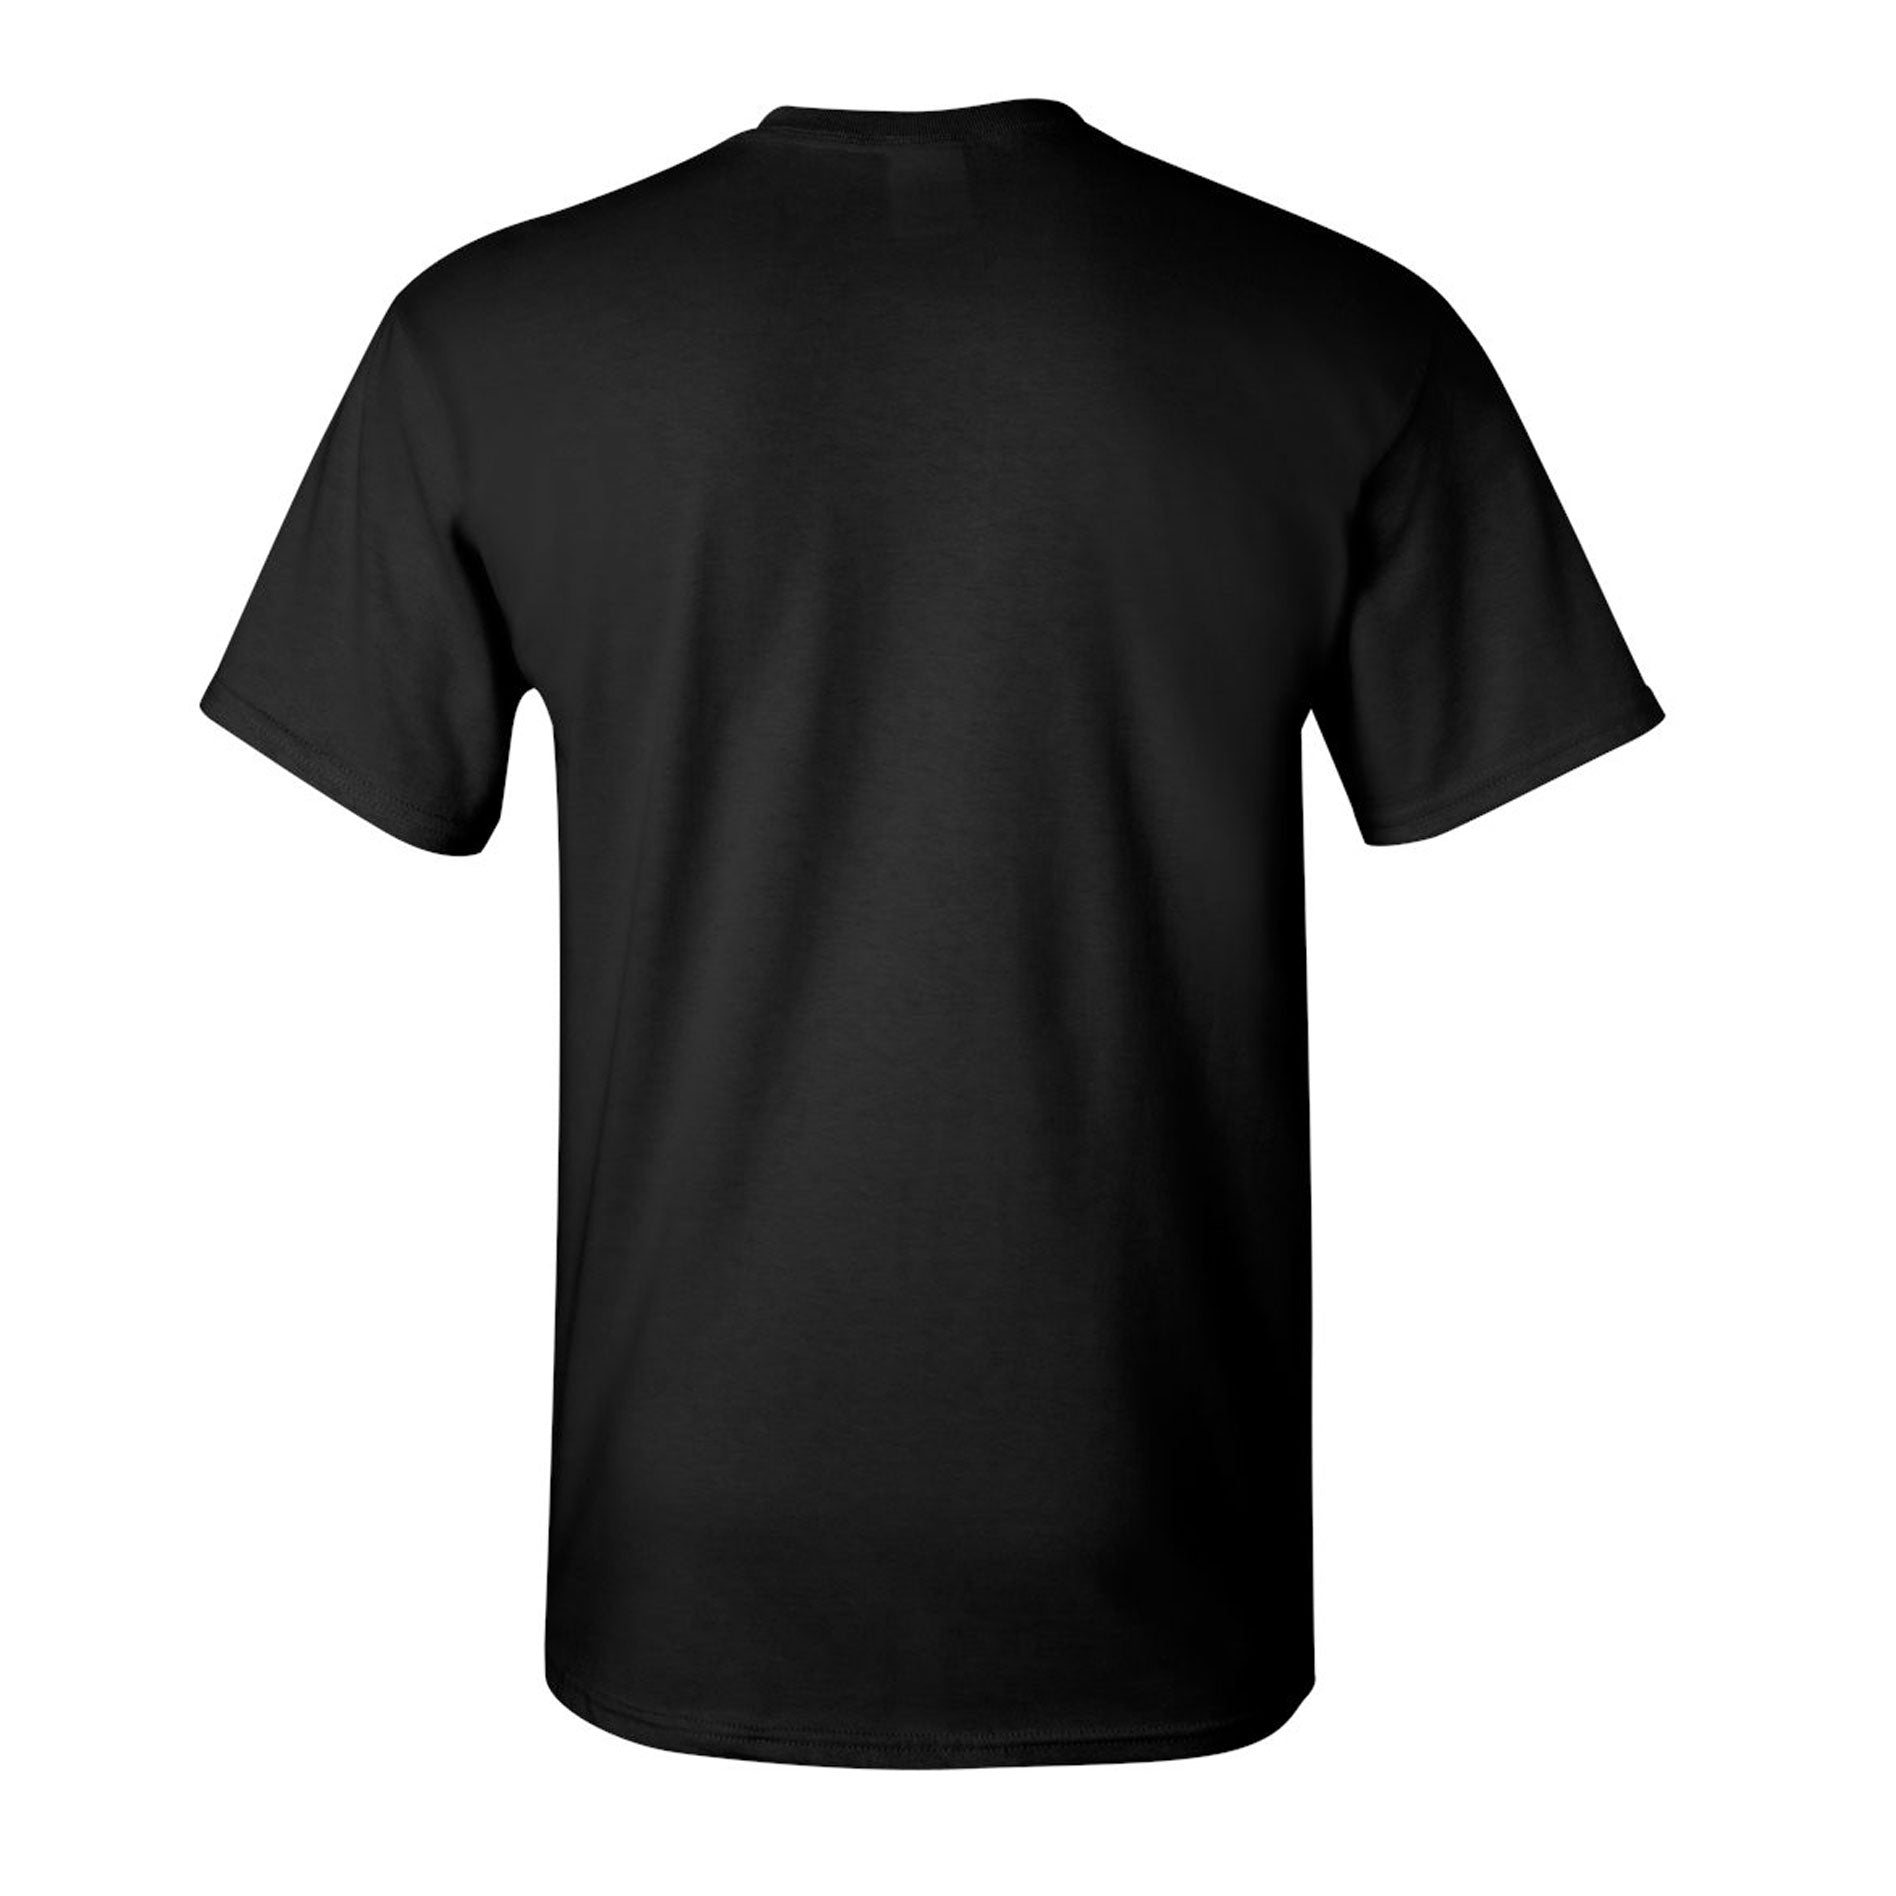 custom tshirts heavyweight urban streetwear feel economy screen gildan 5000 print in black